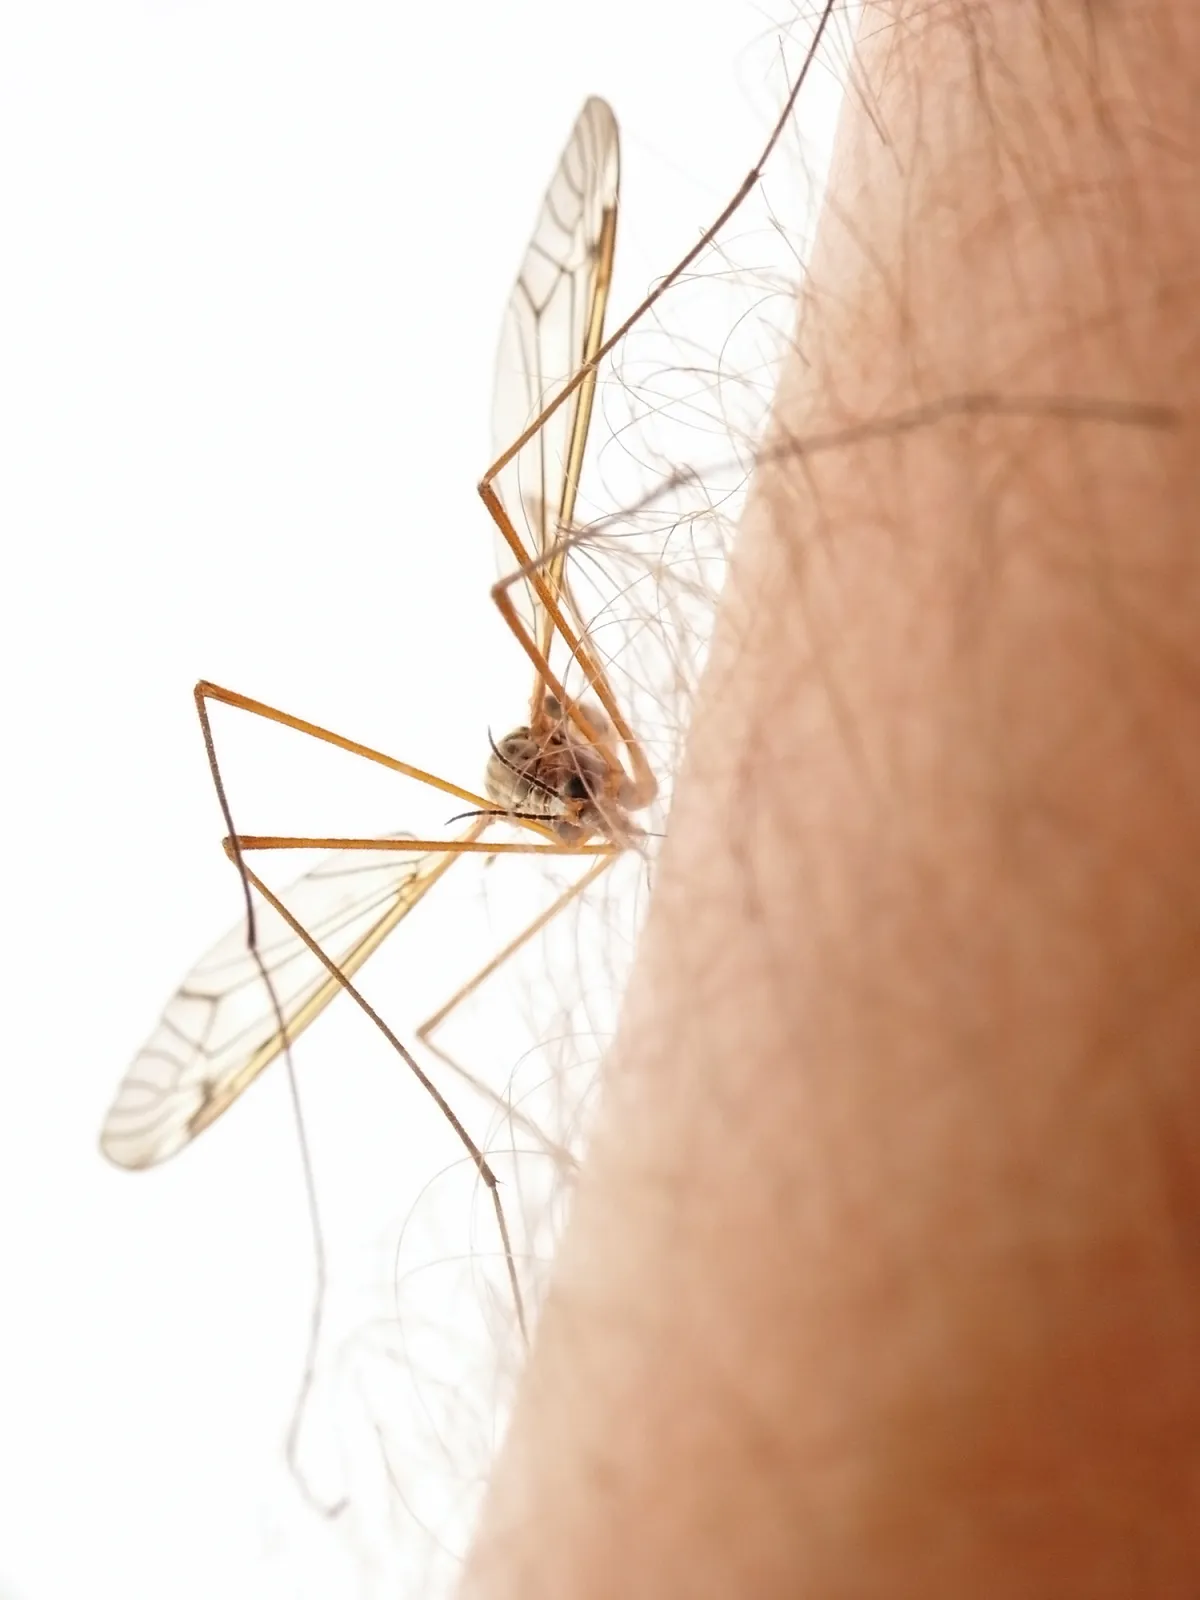 Mosquito on Man s leg